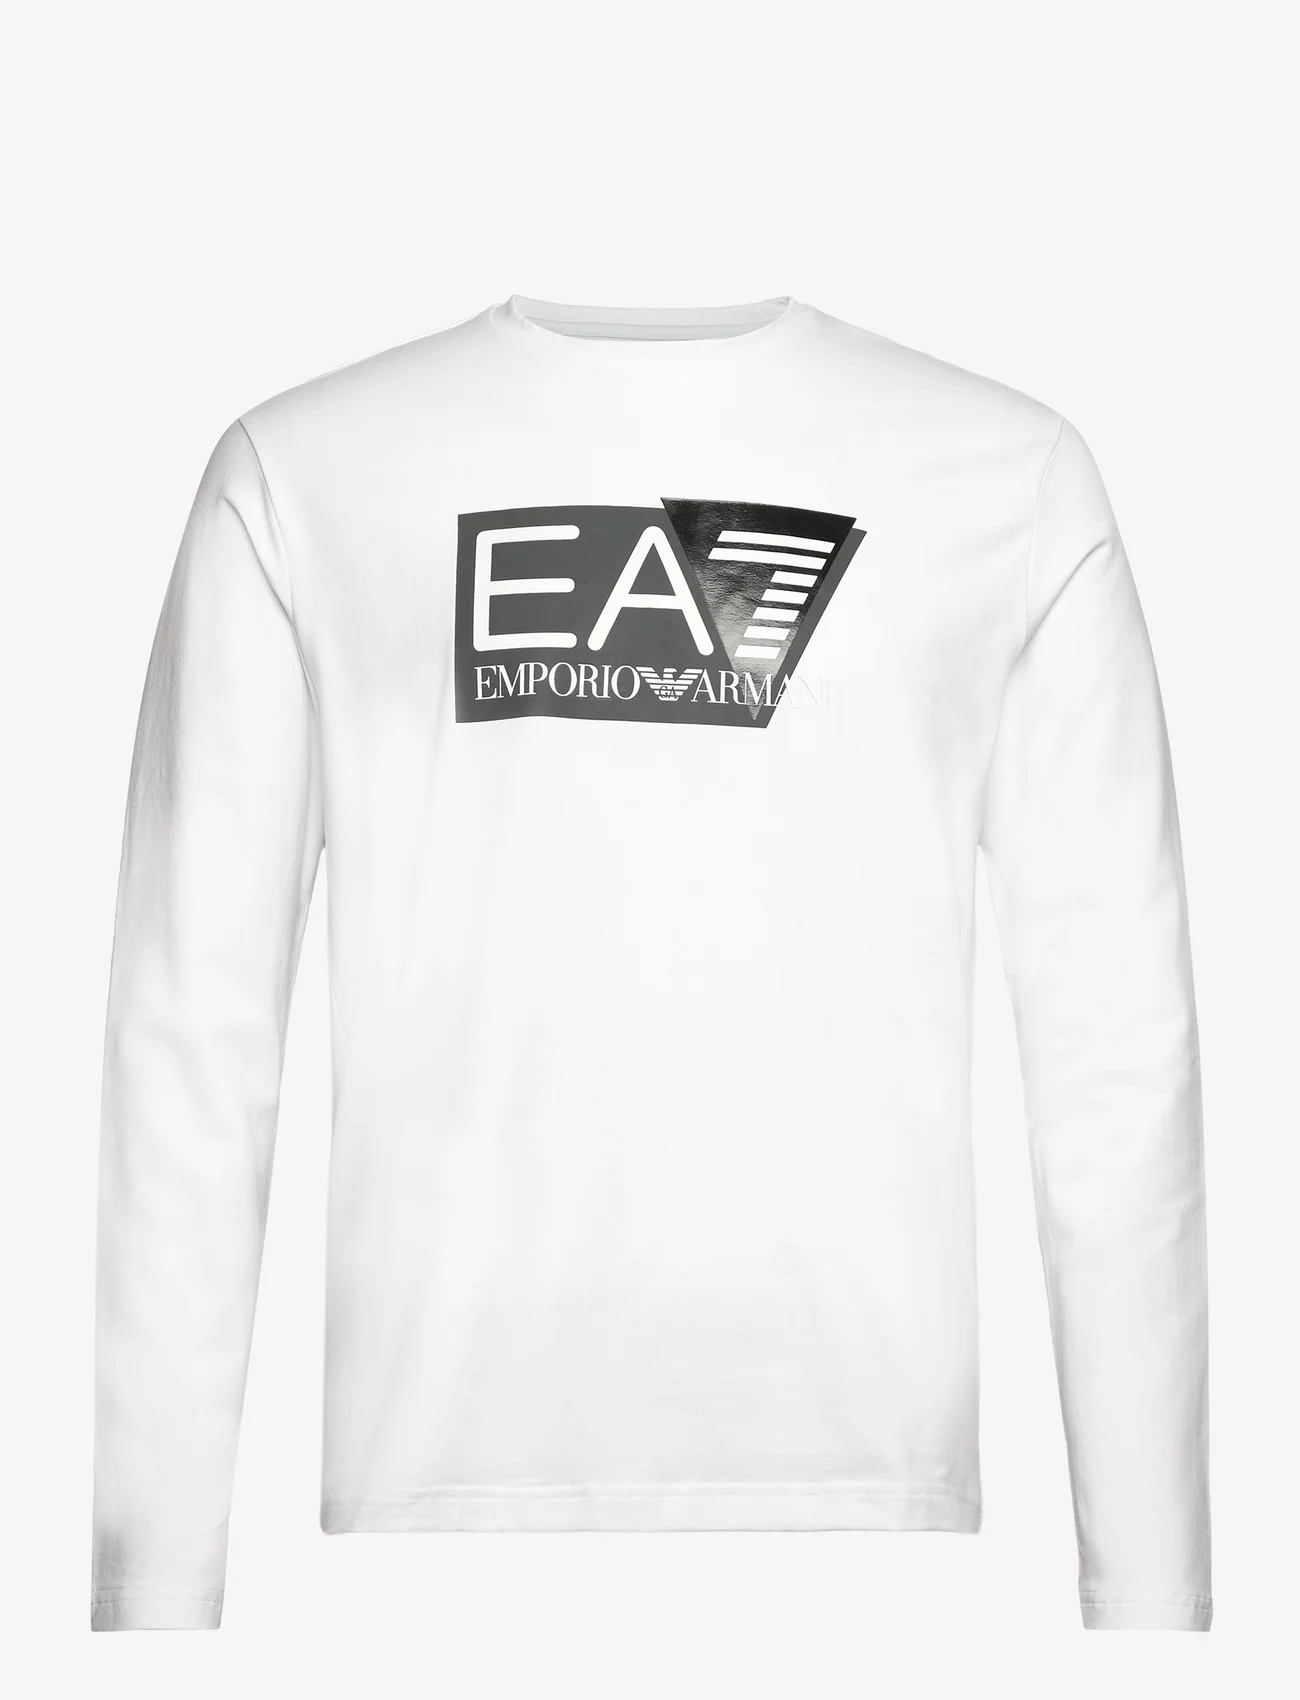 EA7 - T-SHIRT - långärmade tröjor - white - 0